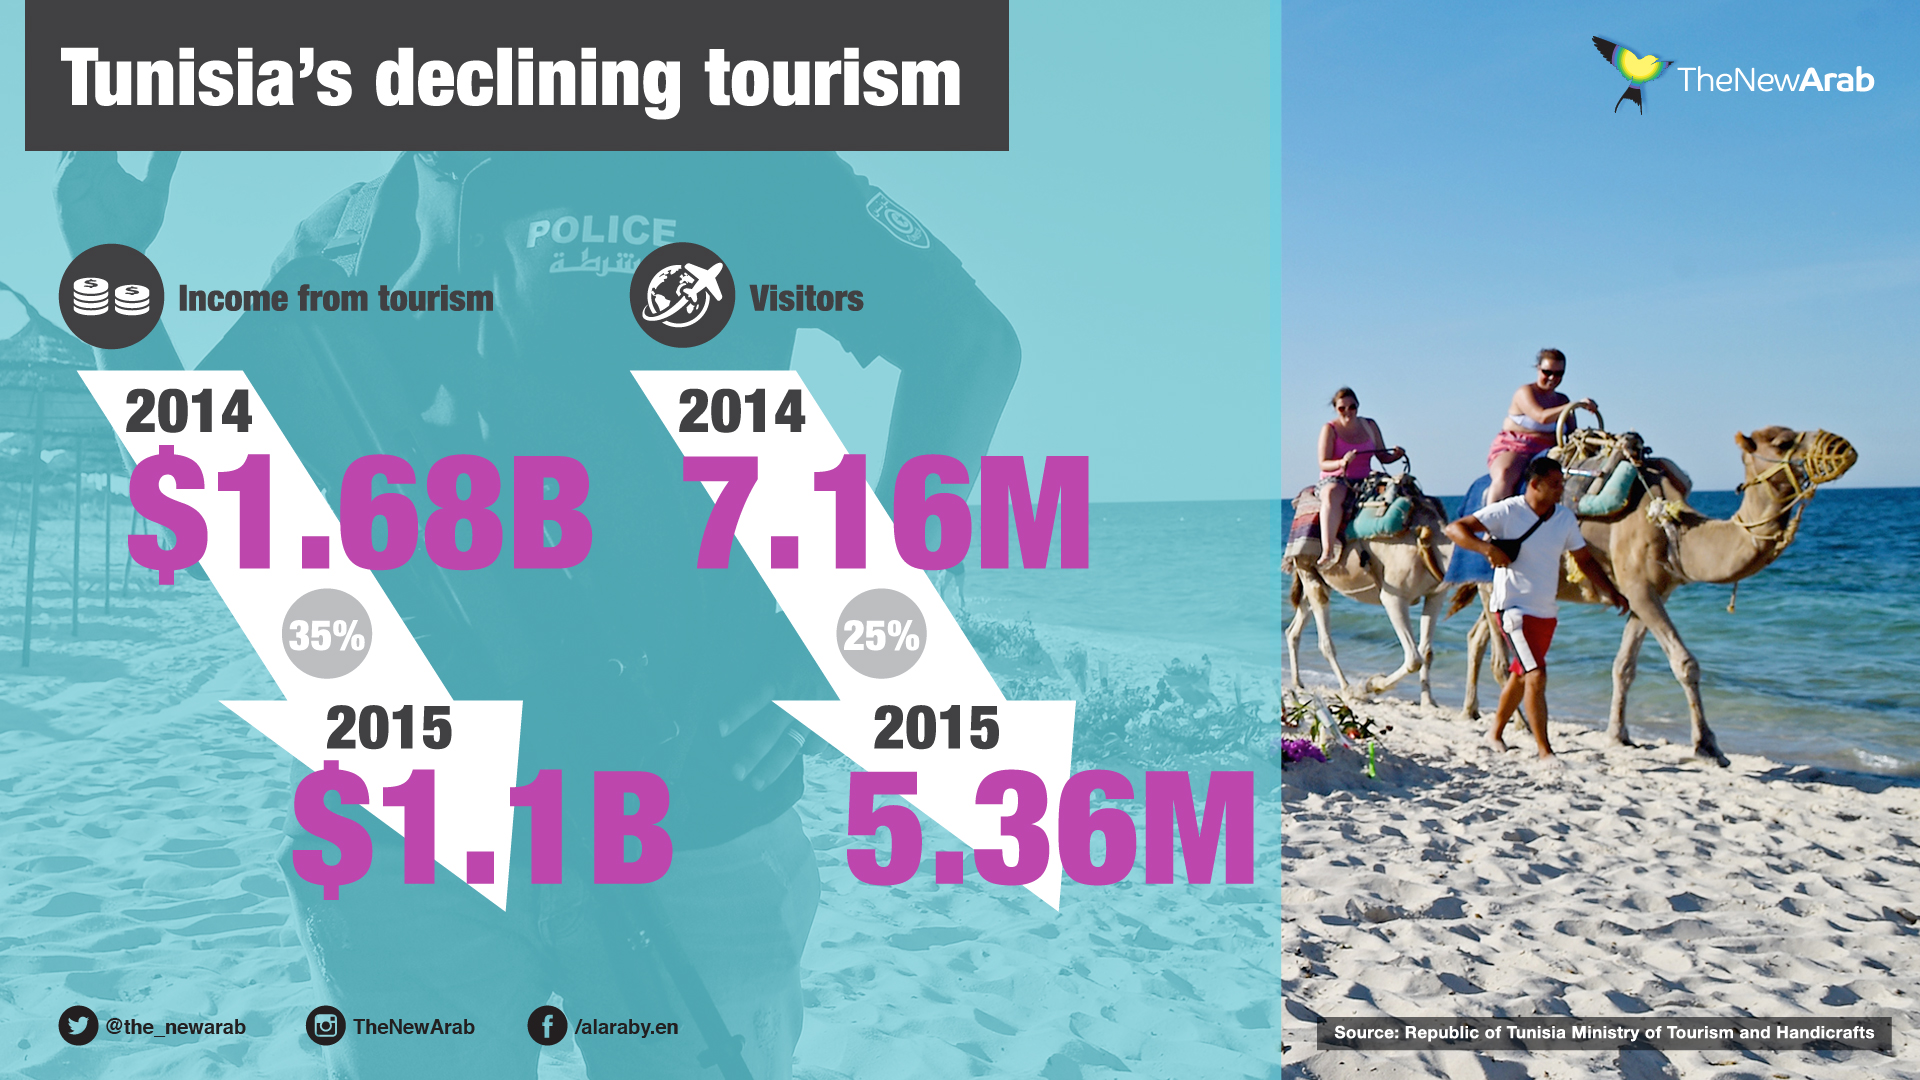 tunisias tourism decline-01.jpg